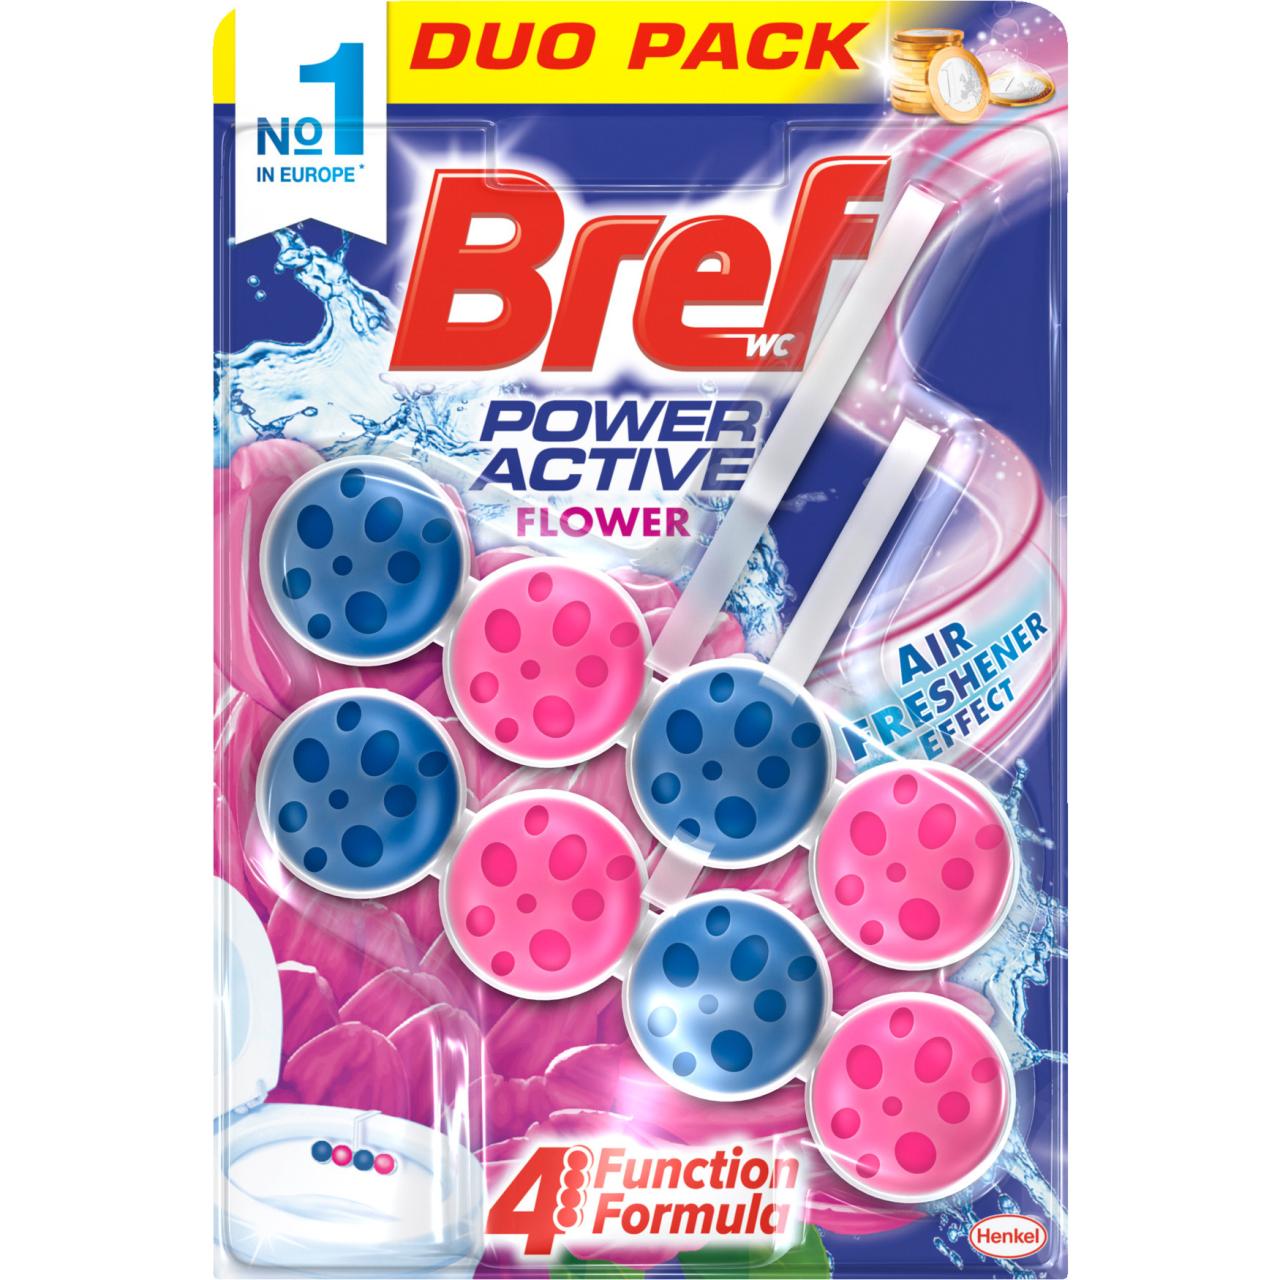 Bref Power Active Fresh Flowers Duo 2x50g